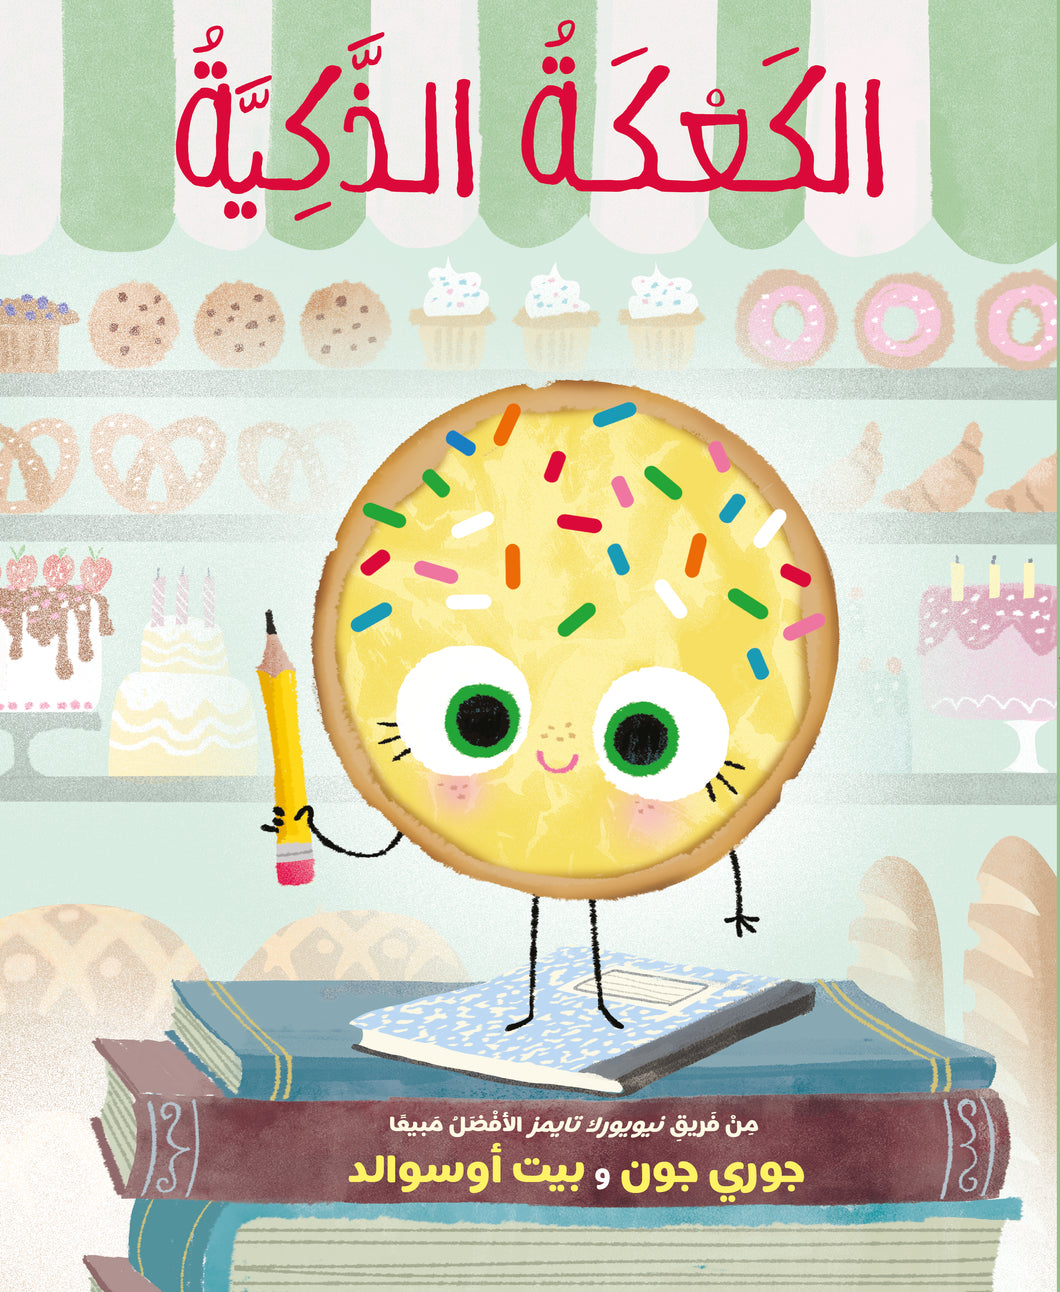 الكعكة الذكية  the smart cookie by jory john and pete oswald translated into arabic 